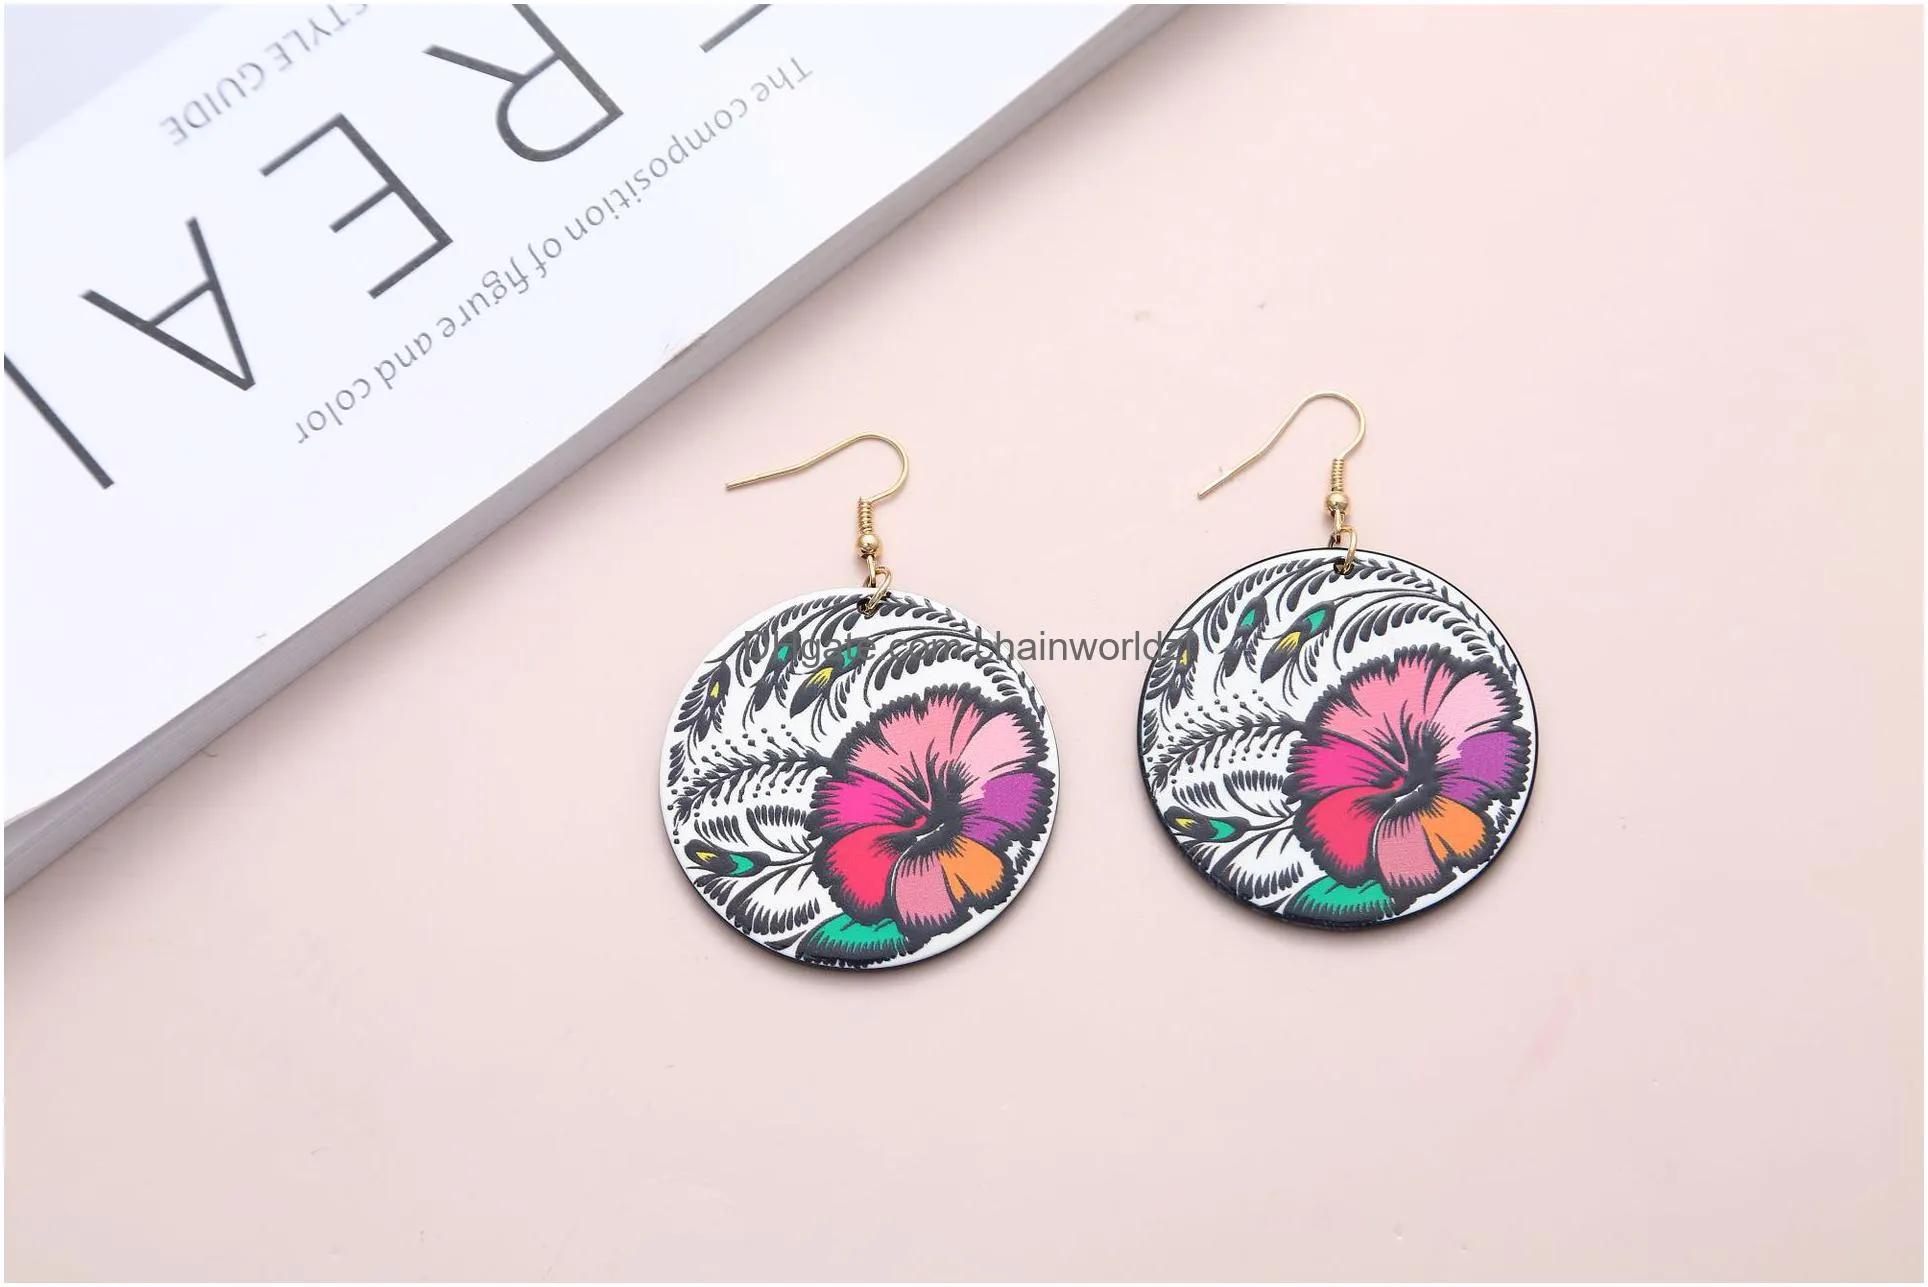 geometric circular colored acrylic earrings light luxury earrings simple temperament female charm personality send friend girl